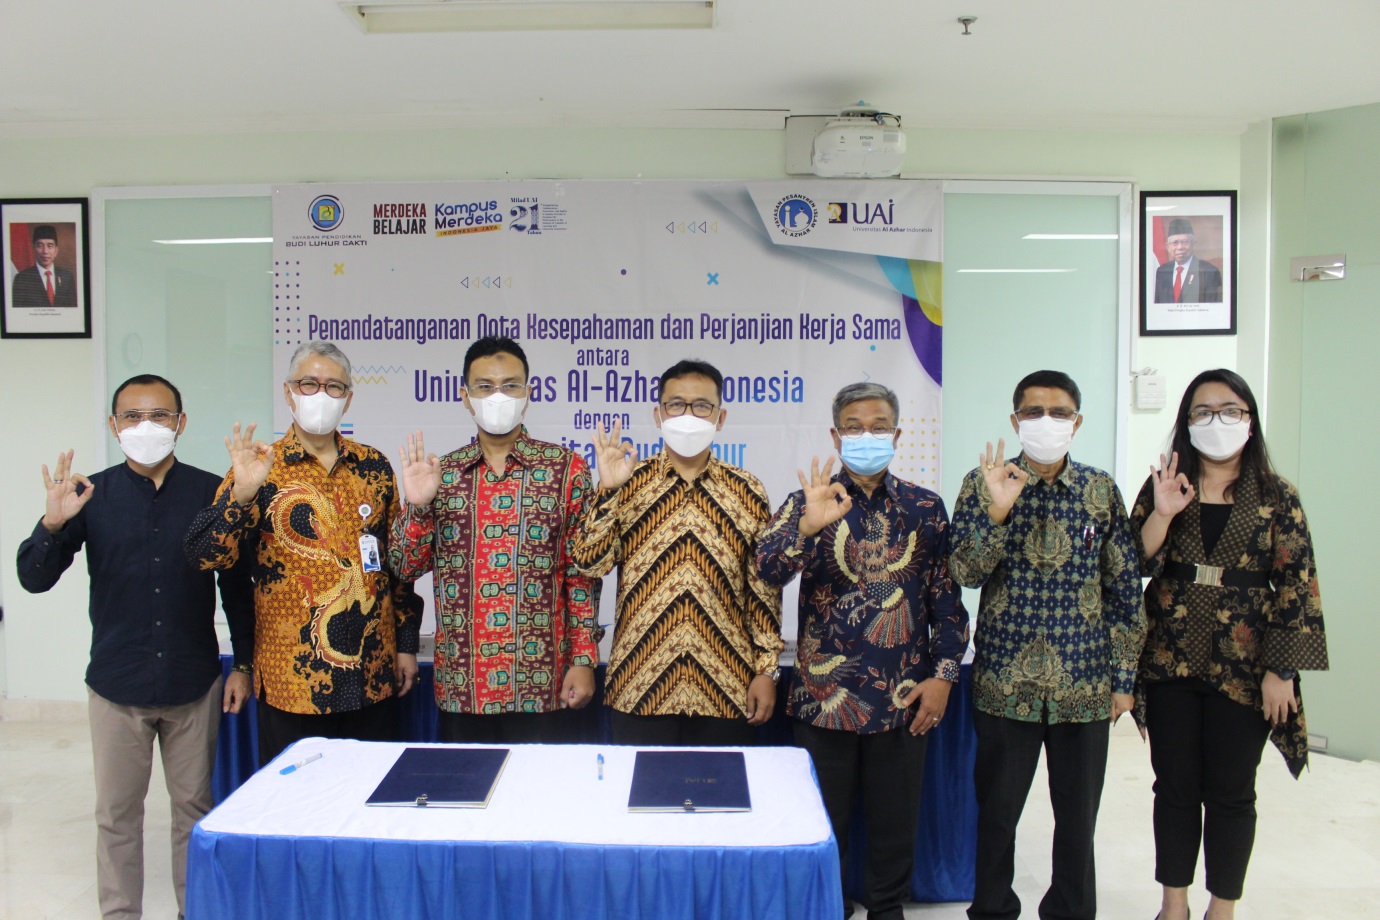 University Al-Azhar Indonesia Emphasized Cooperation Program Of Merdeka Belajar Kampus Merdeka (MBKM) With University Of Budi Luhur